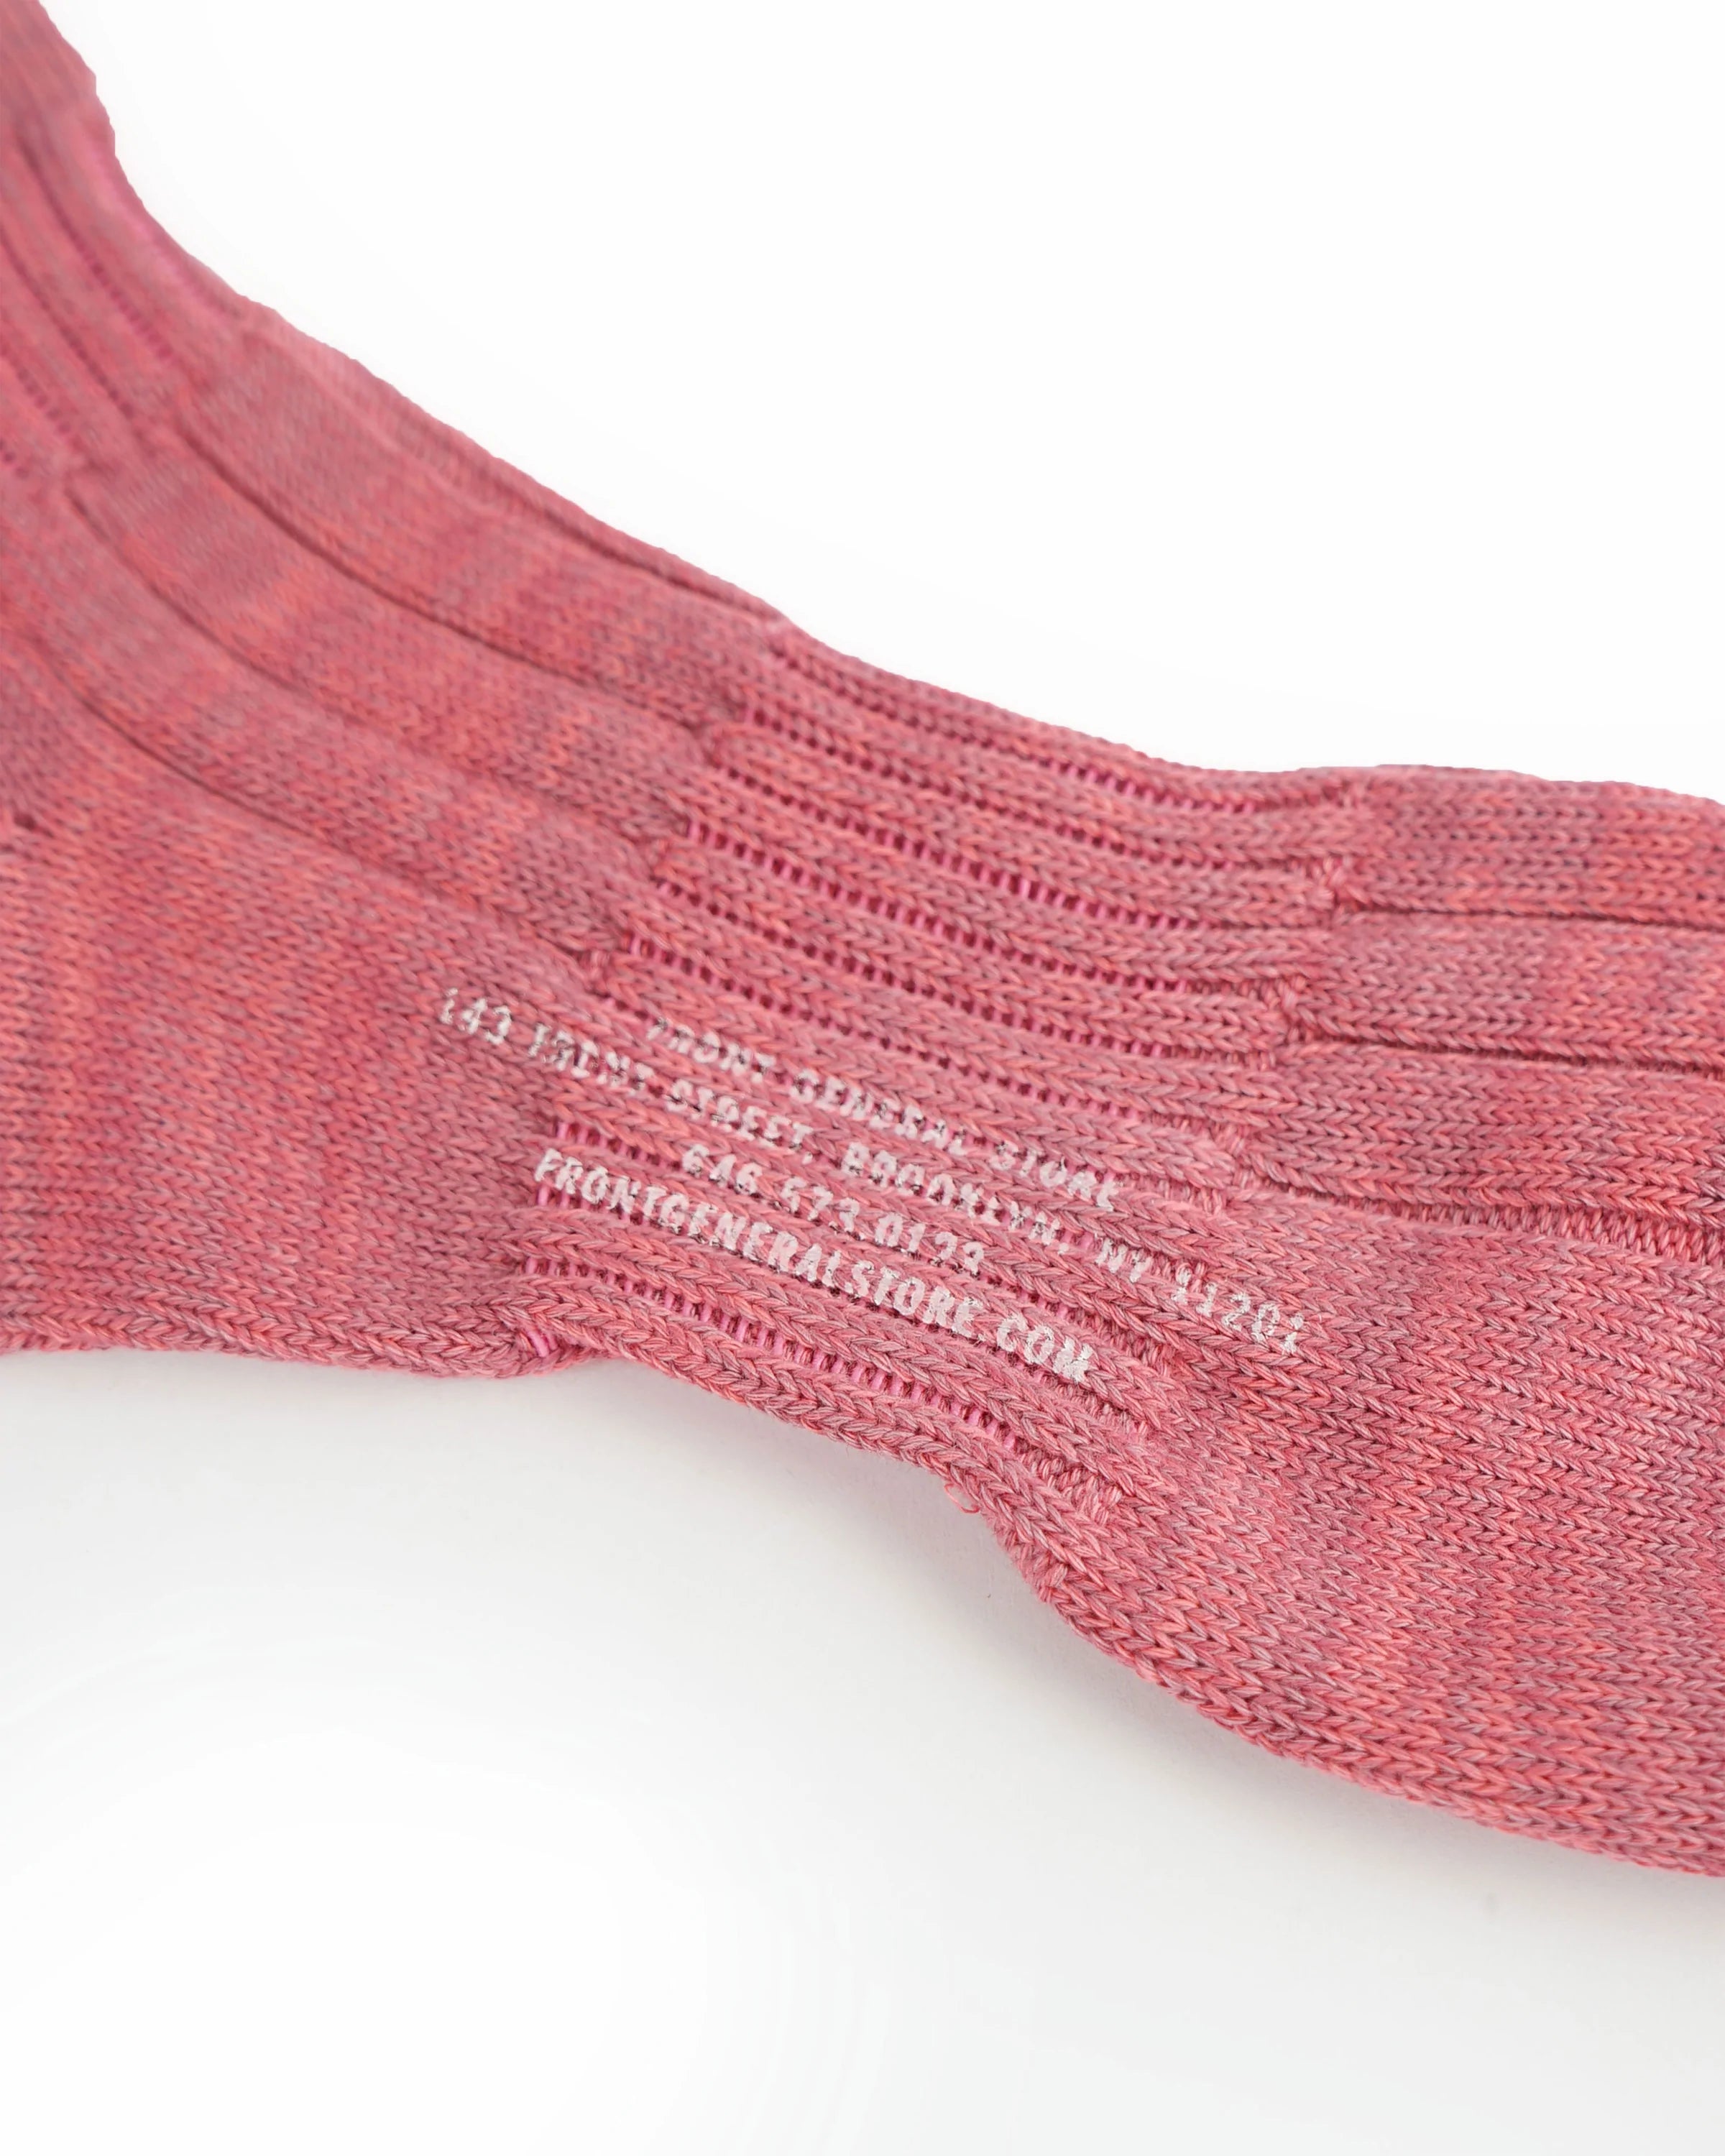 Outlast Hiker Socks / Pink